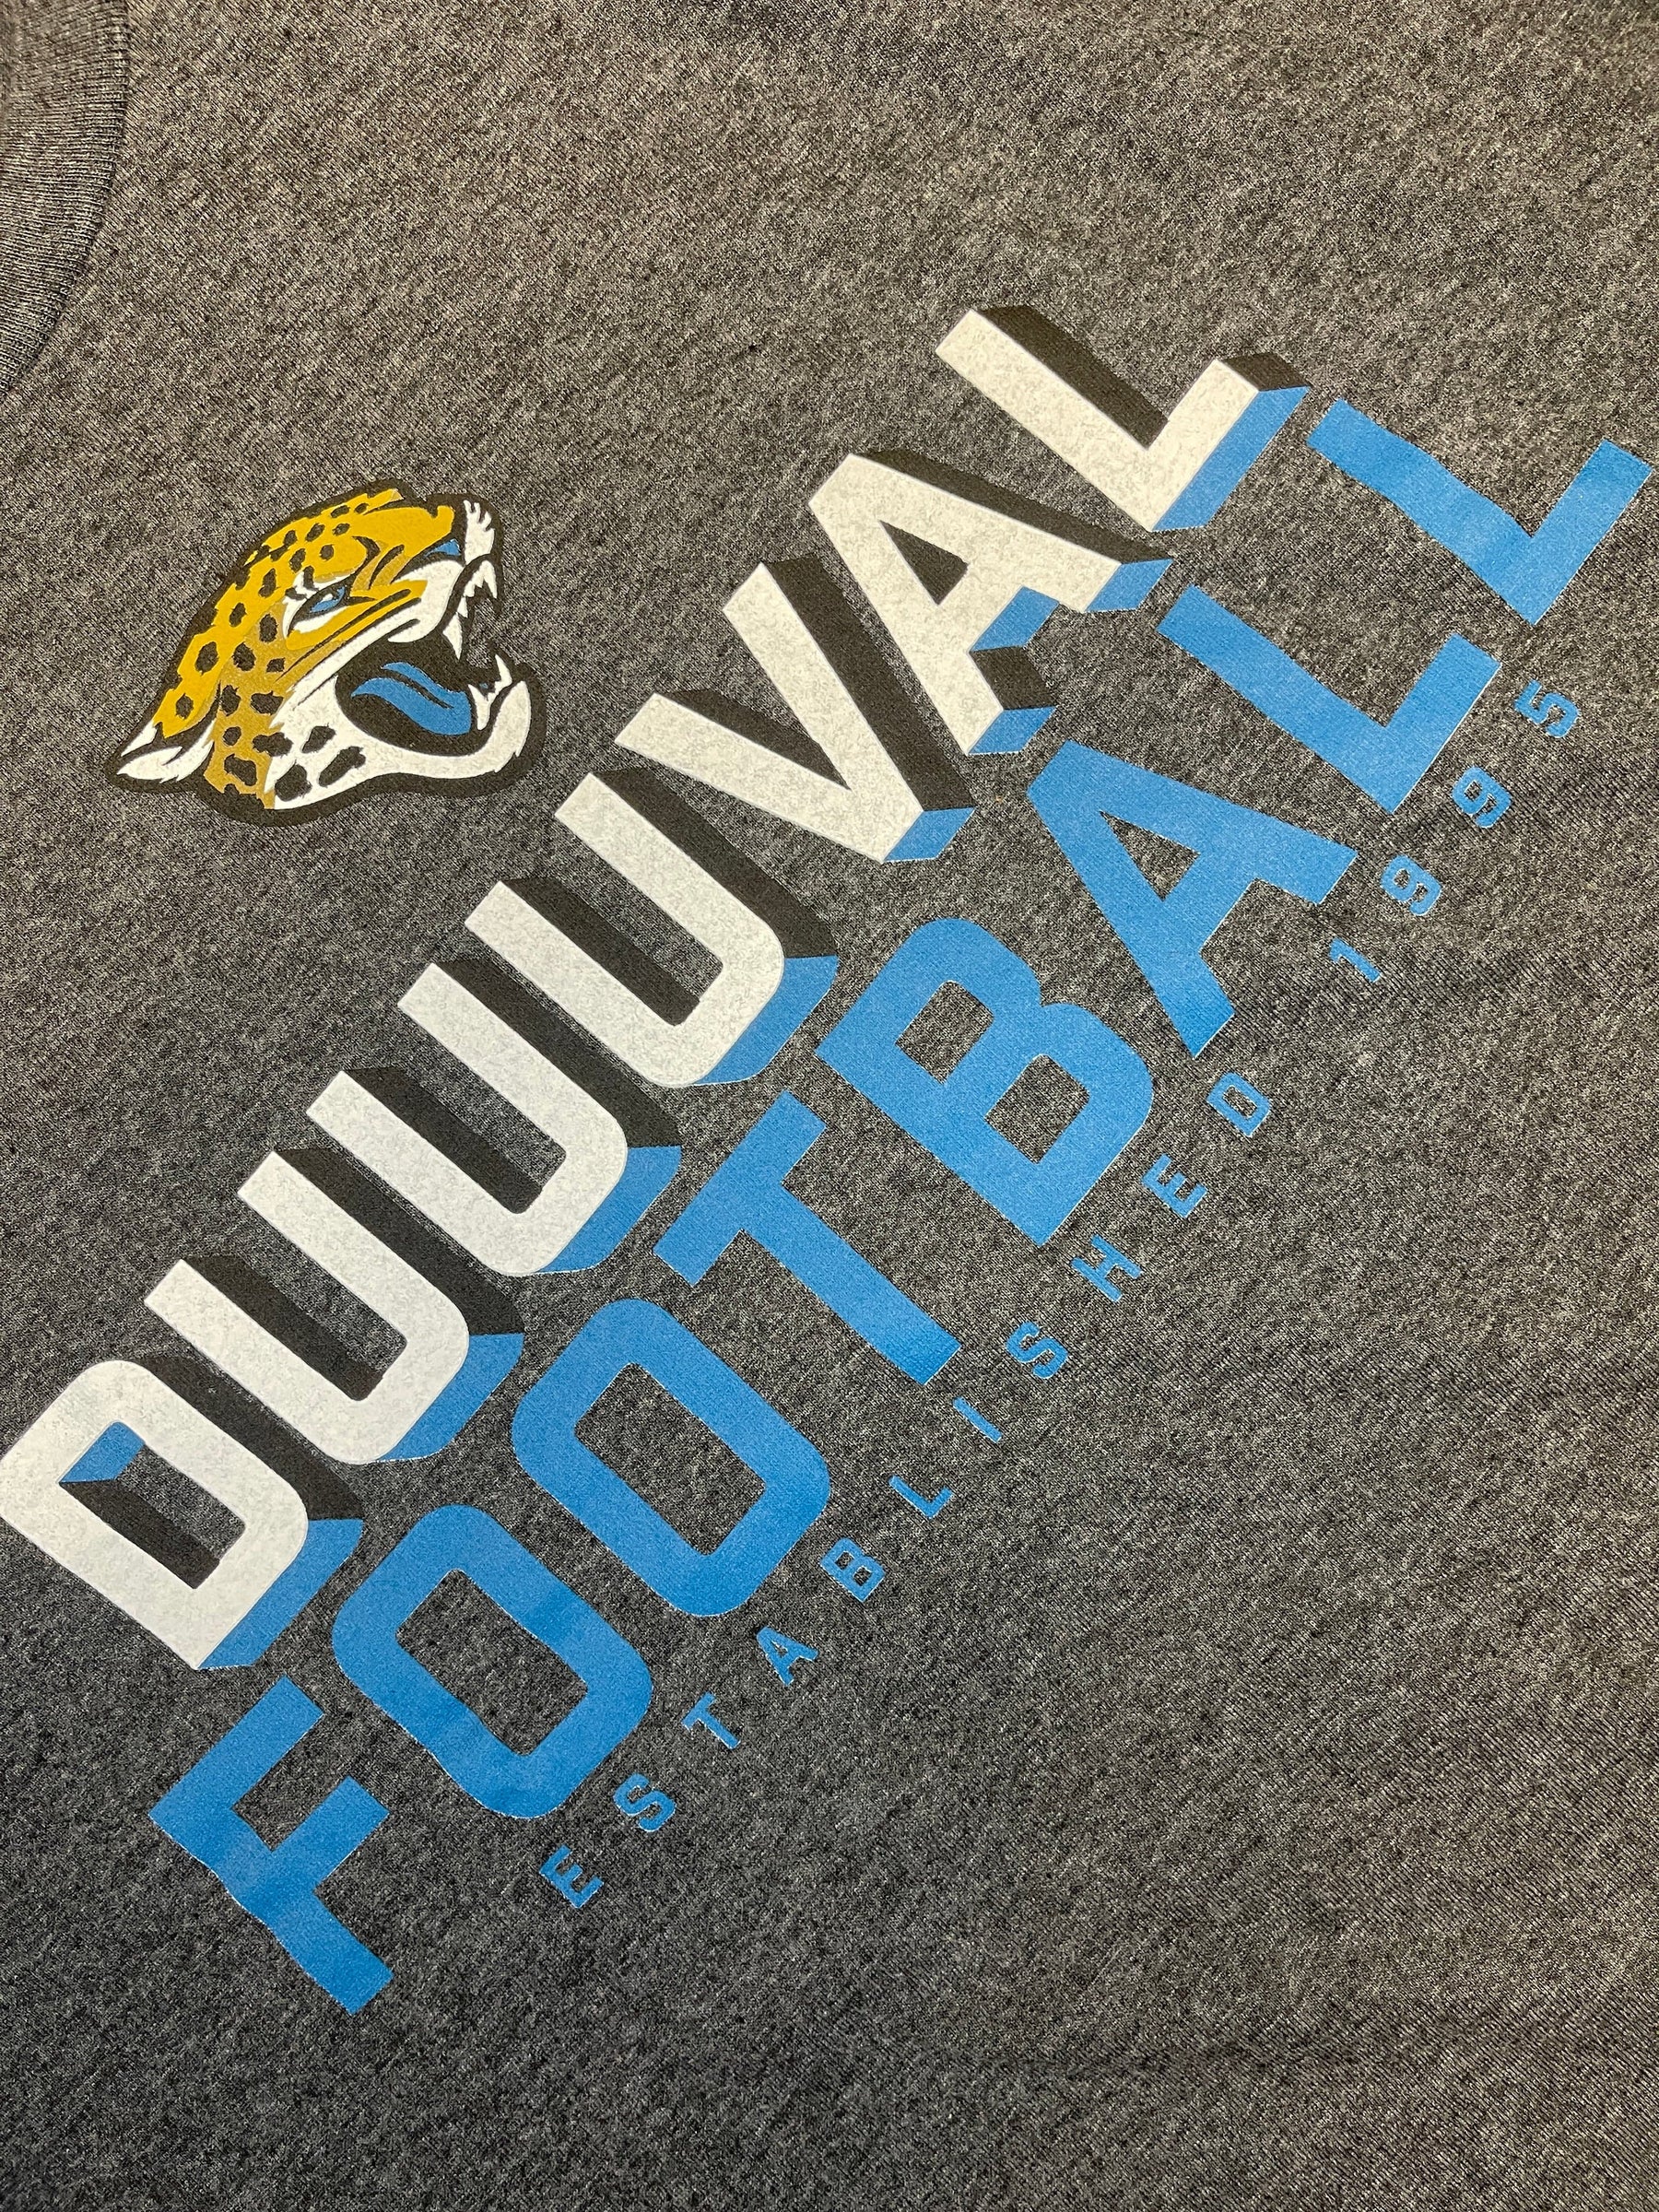 NFL Jacksonville Jaguars Fanatics Heathered Charcoal T-Shirt Men's X-Large NWT